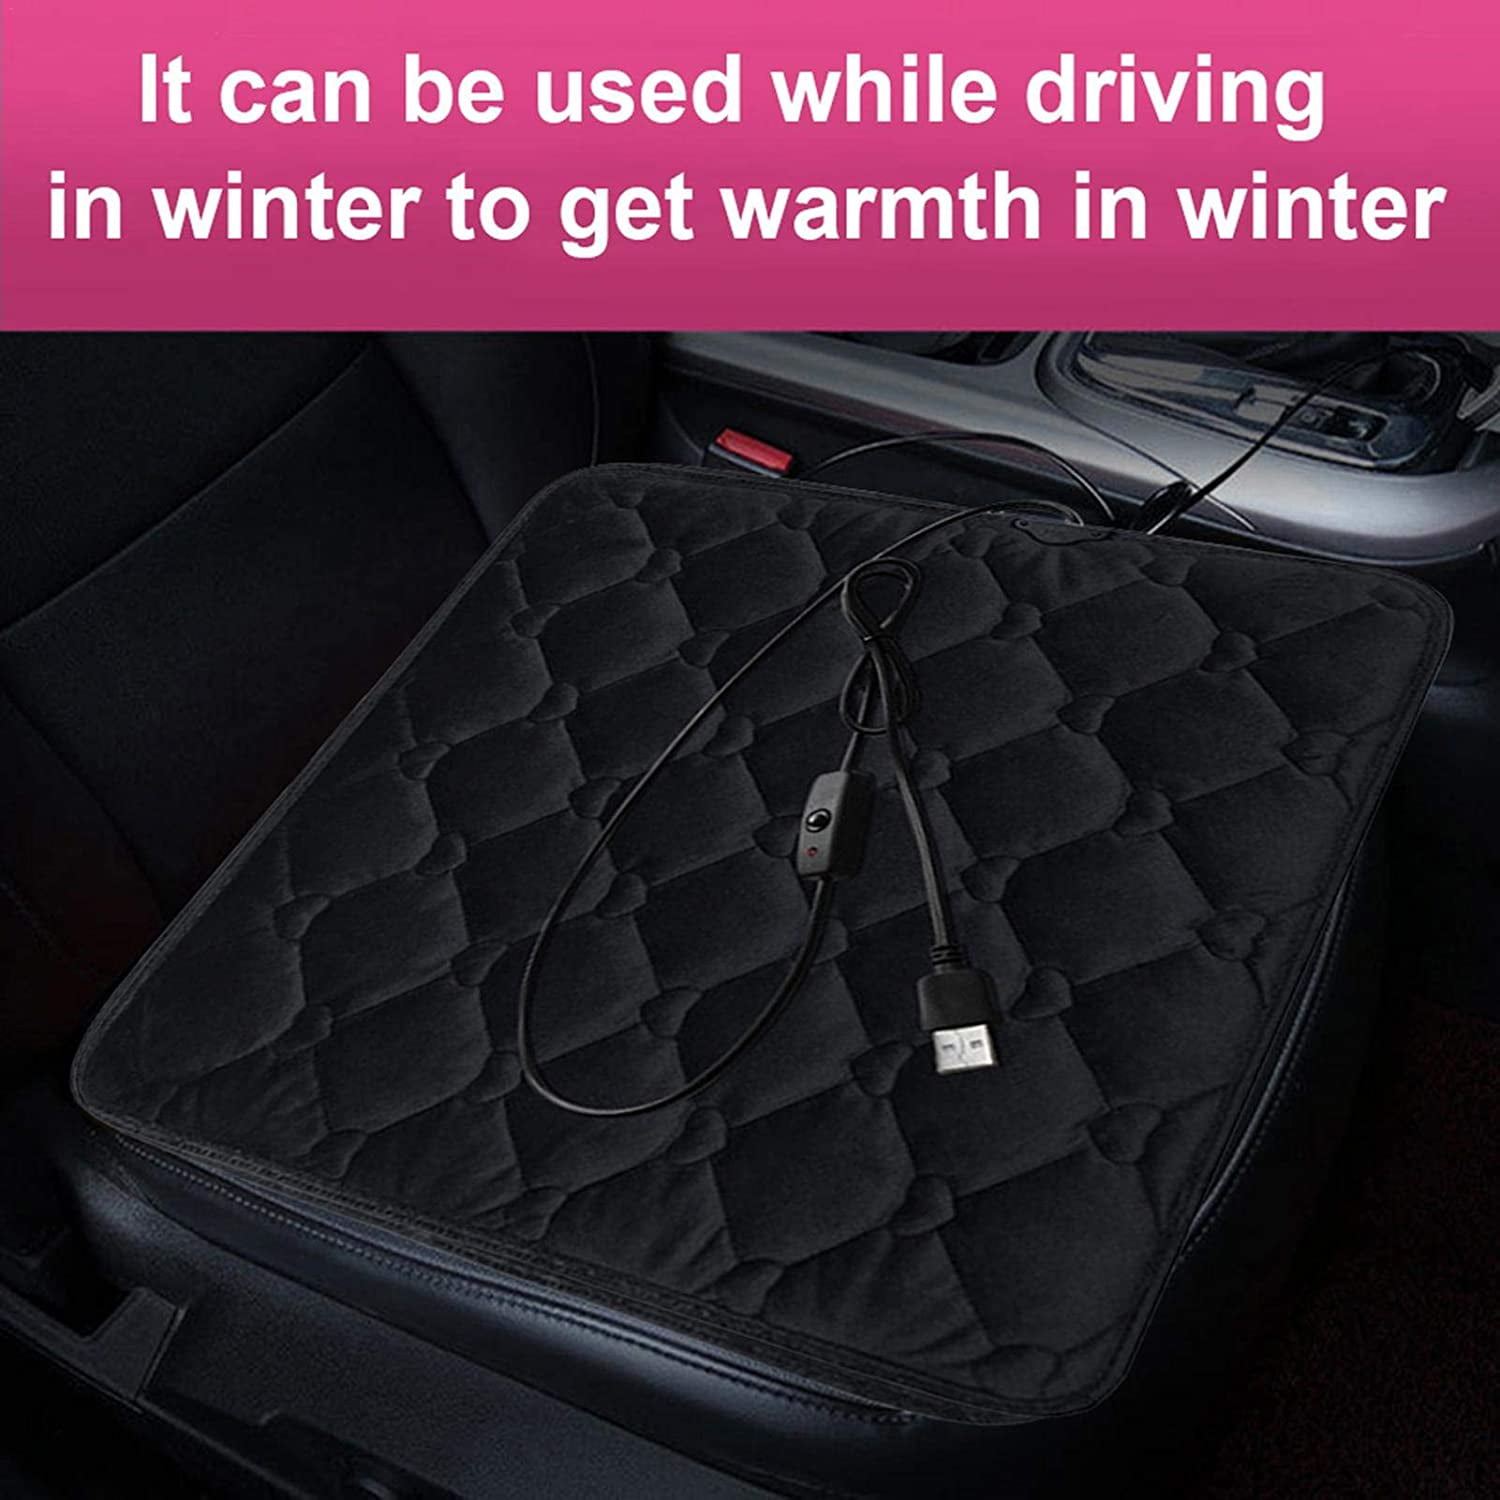 45 X45cm Electric Seat Cushion USB Heated Office Home Car Seat Cushion  Heating Warmer Pads Winter Hot Plush Warm Seat Cover